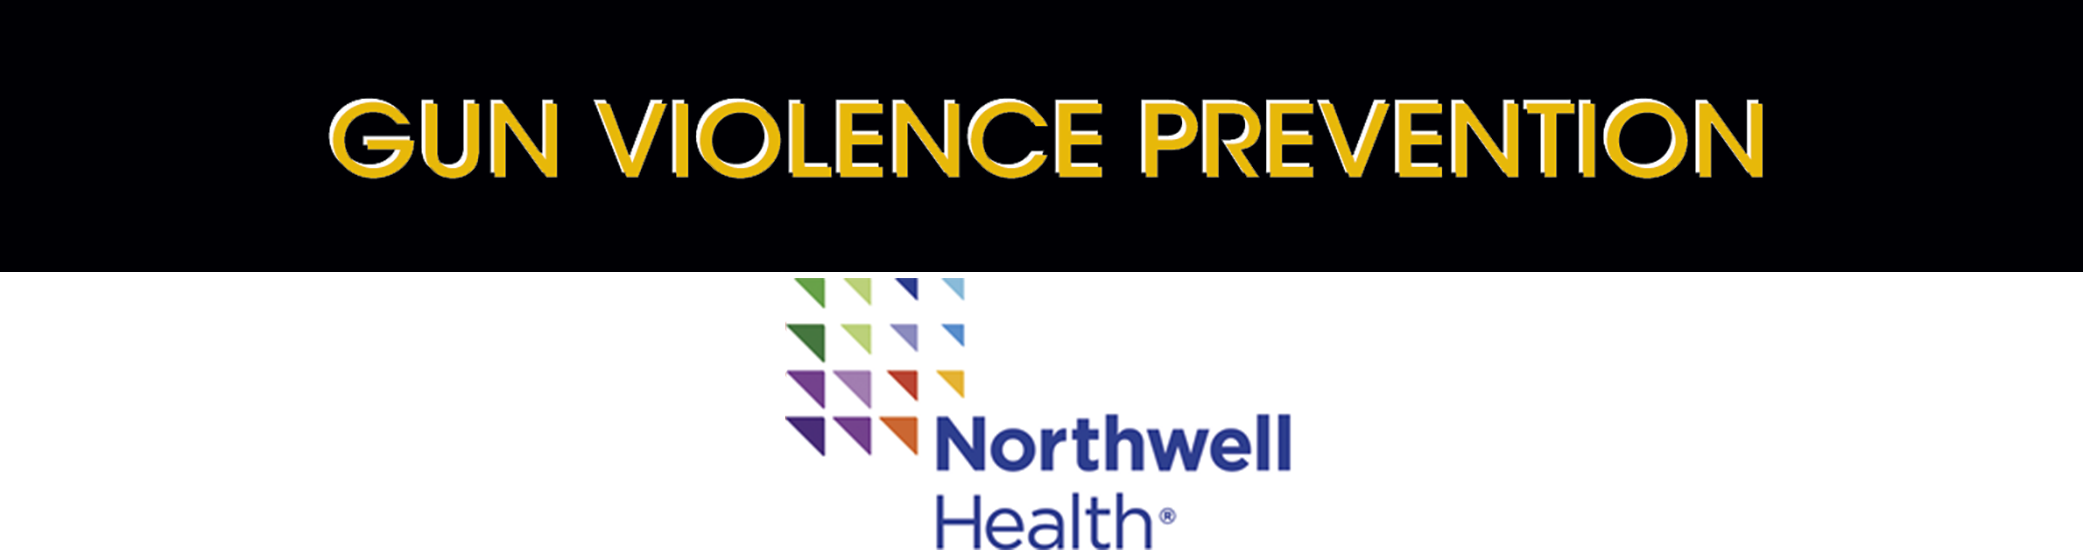 Gun Violence Prevention - Northwell Health